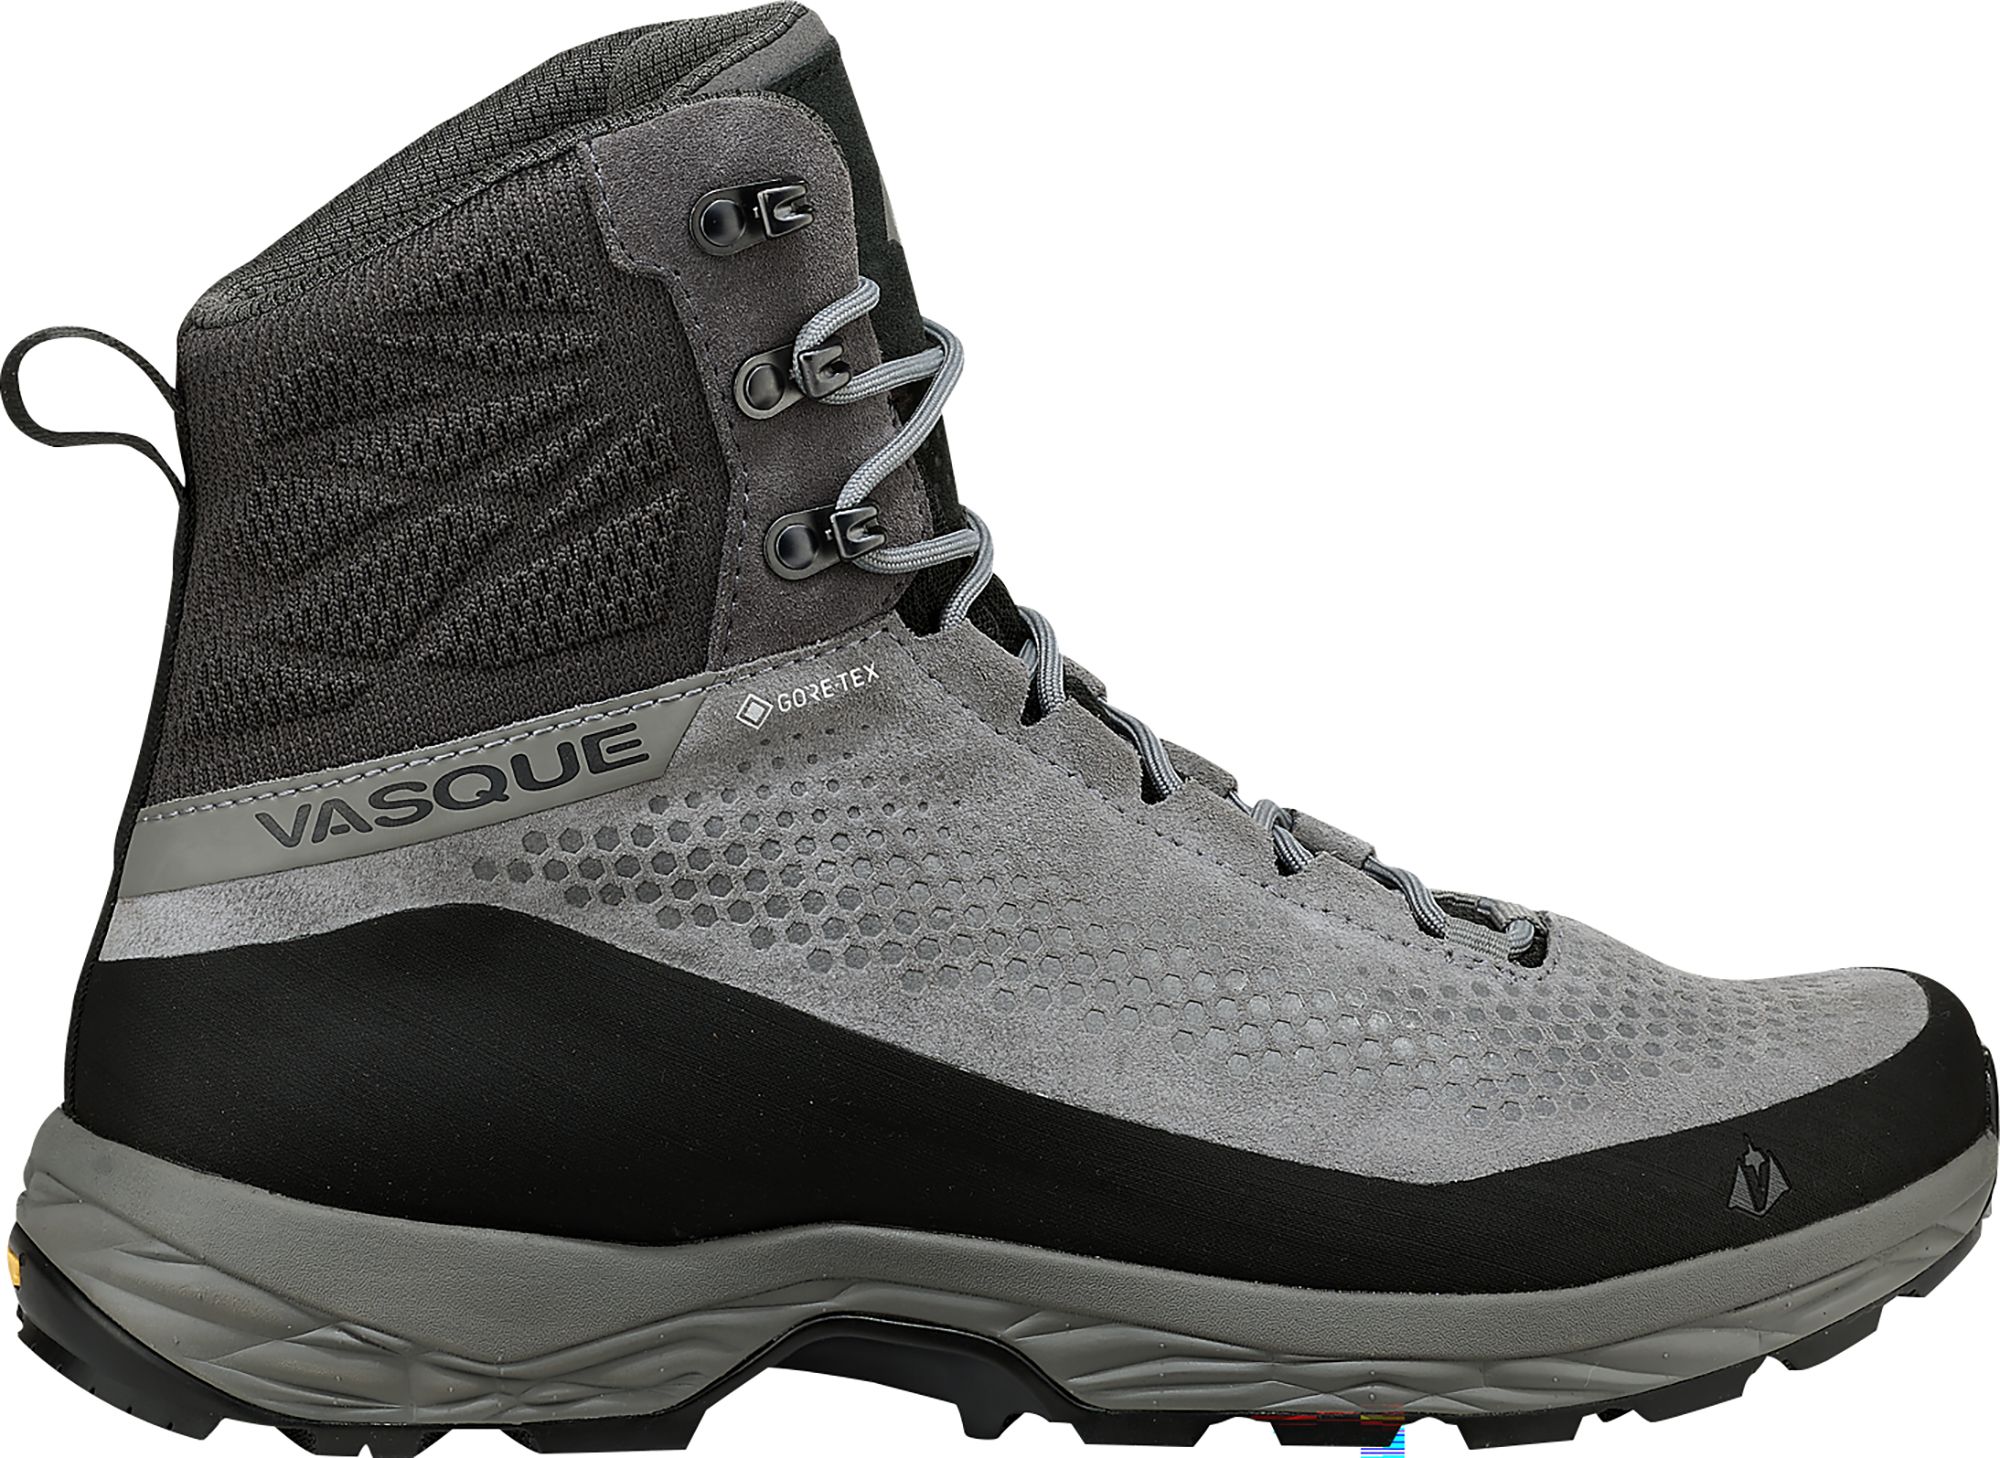 Photos - Trekking Shoes Vasque Men's Torre AT GTX Hiking Boots, Size 8.5, Gargoyle | Father's Day 